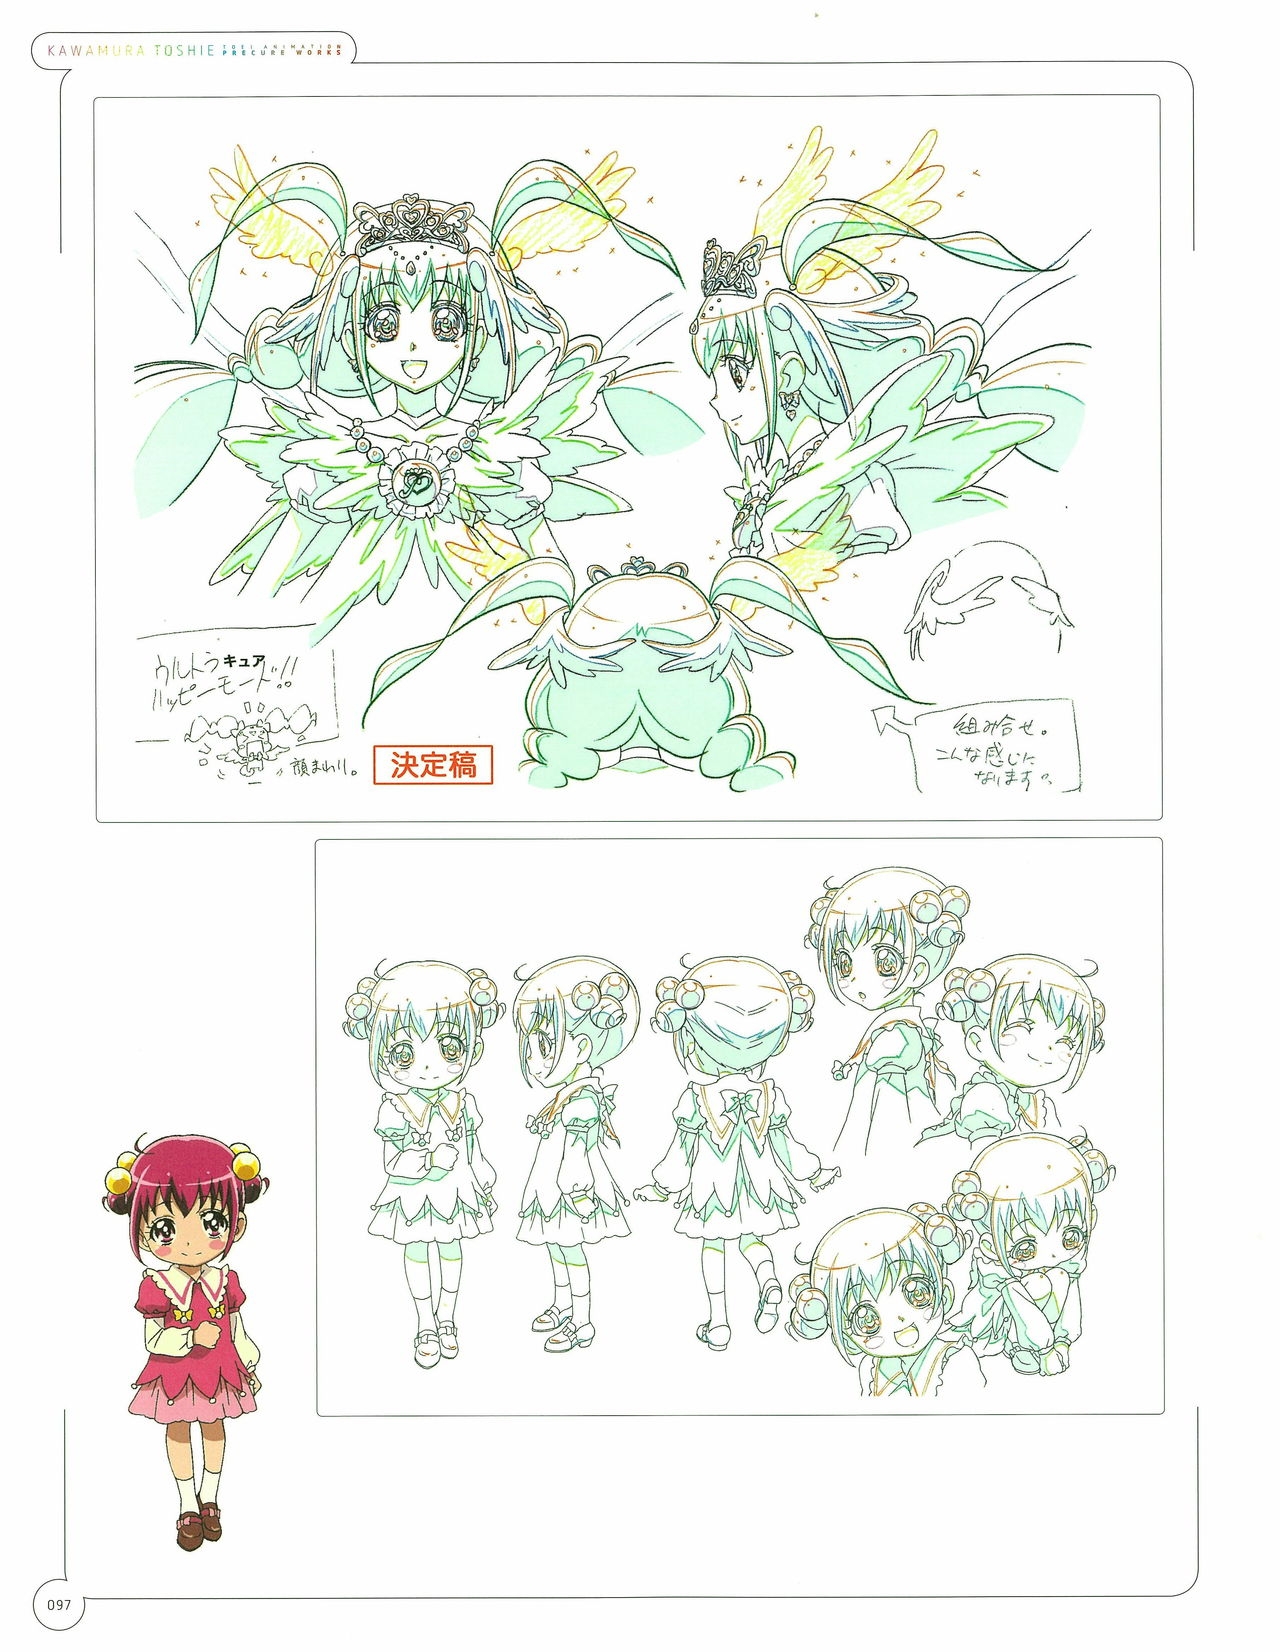 Kawamura Toshie - Toei Animation Precure Works 97